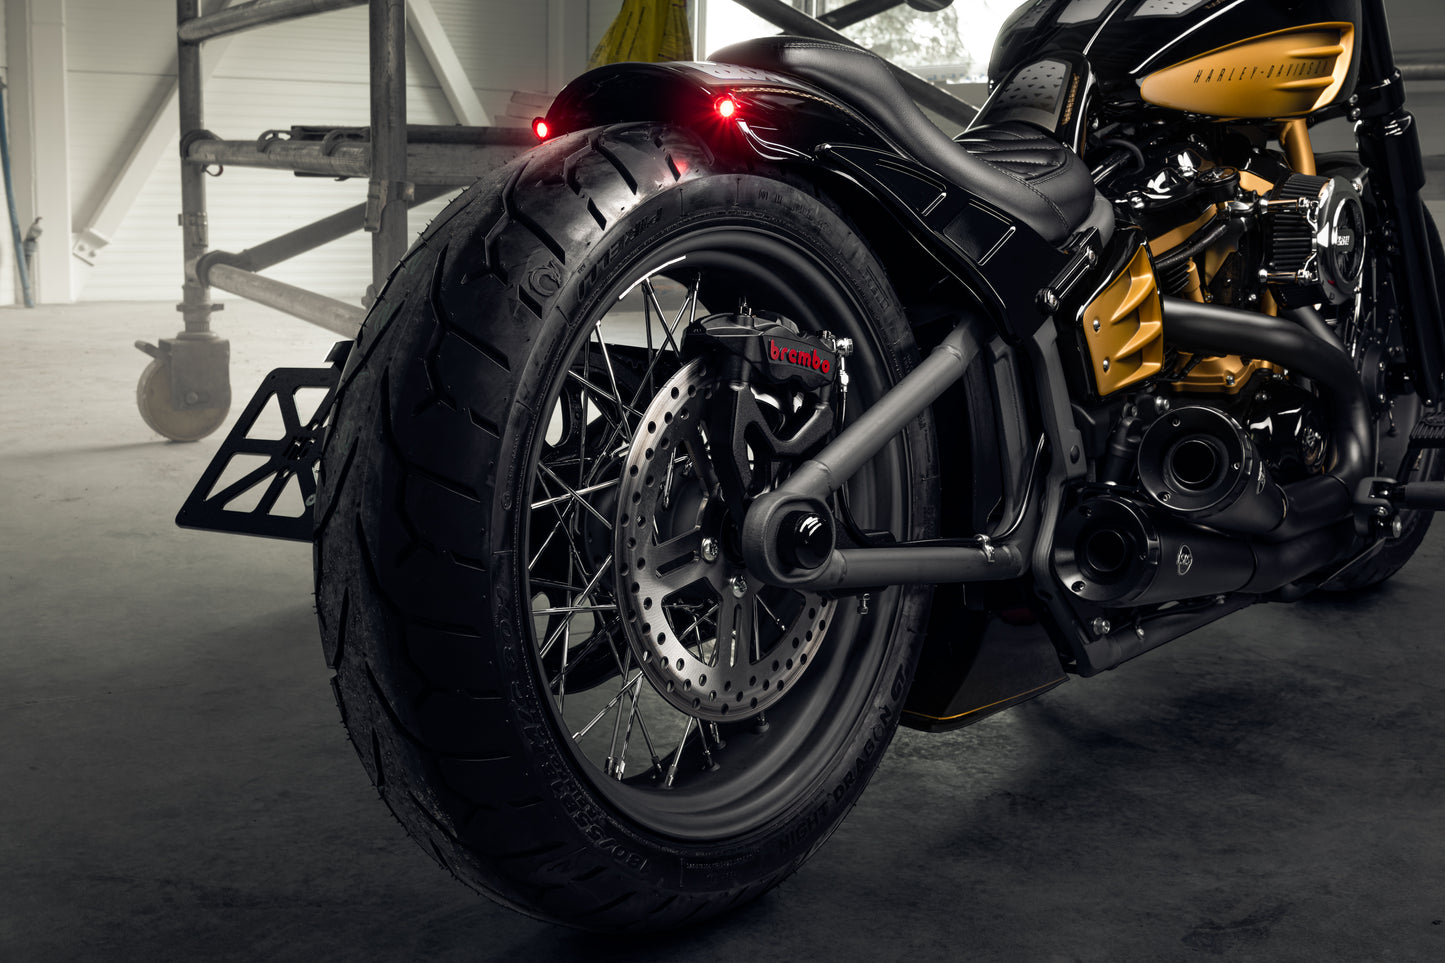 Zoomed Harley Davidson motorcycle with Killer Custom "Rodstr" rear fender from the rear in a modern garage